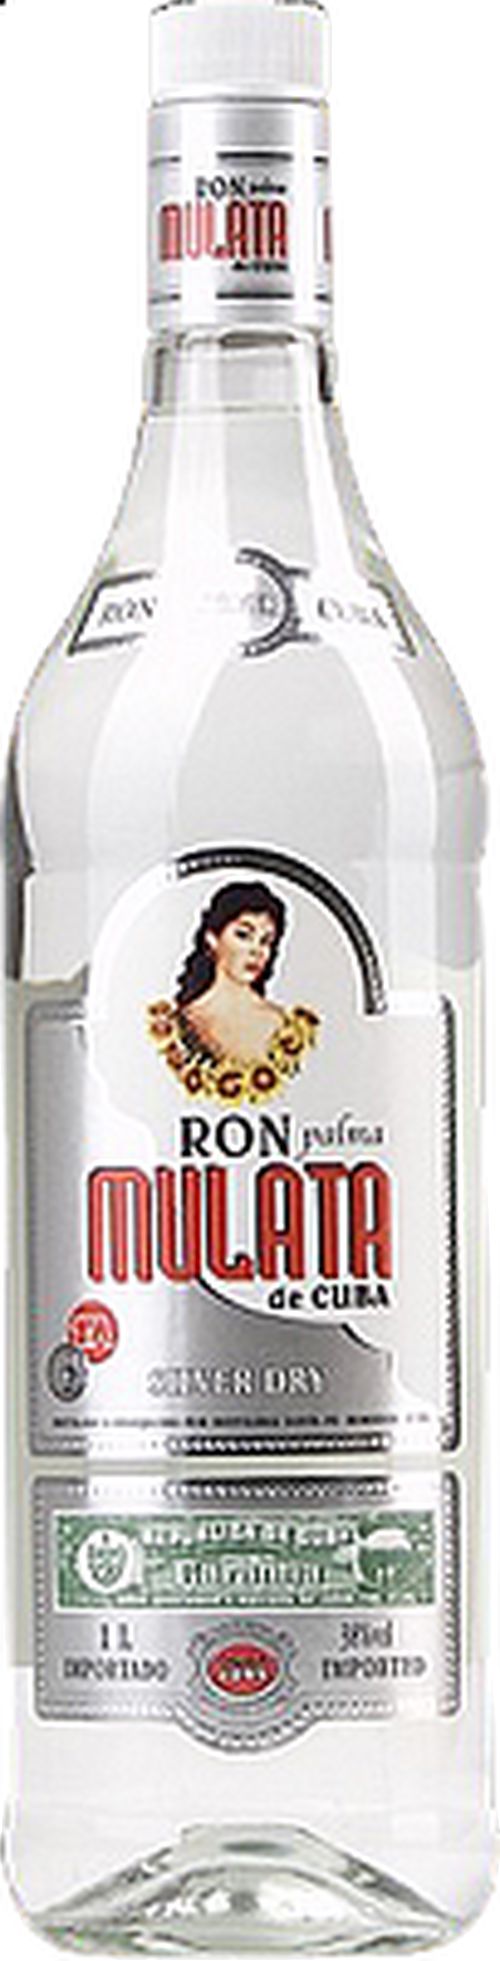 Ron Palma Mulata Silver Dry 1l 38%